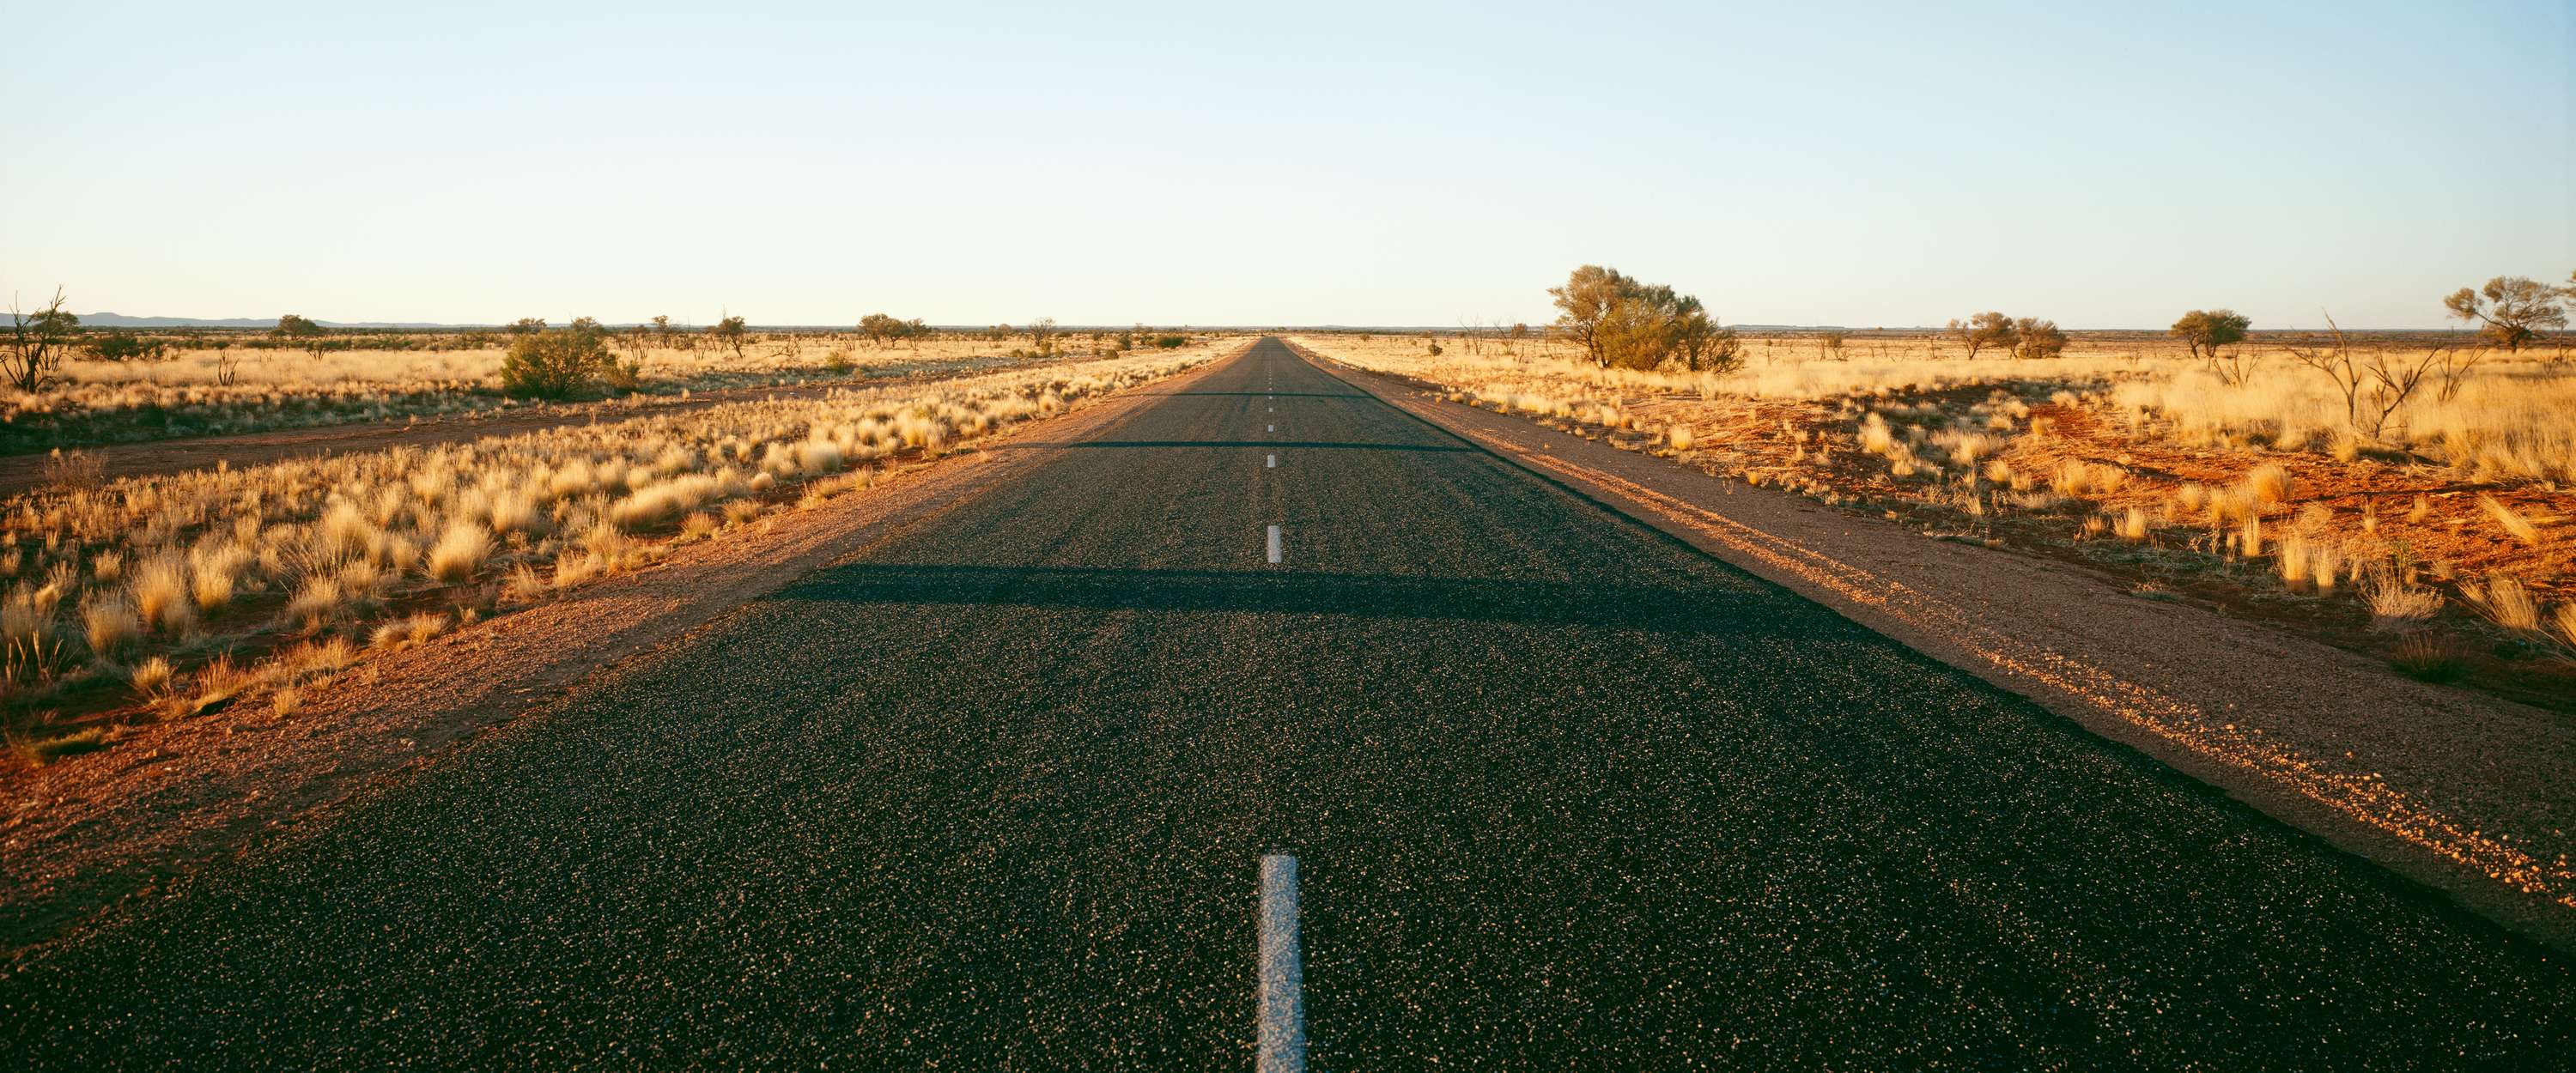             Mural Carretera del desierto y horizonte lejano
        